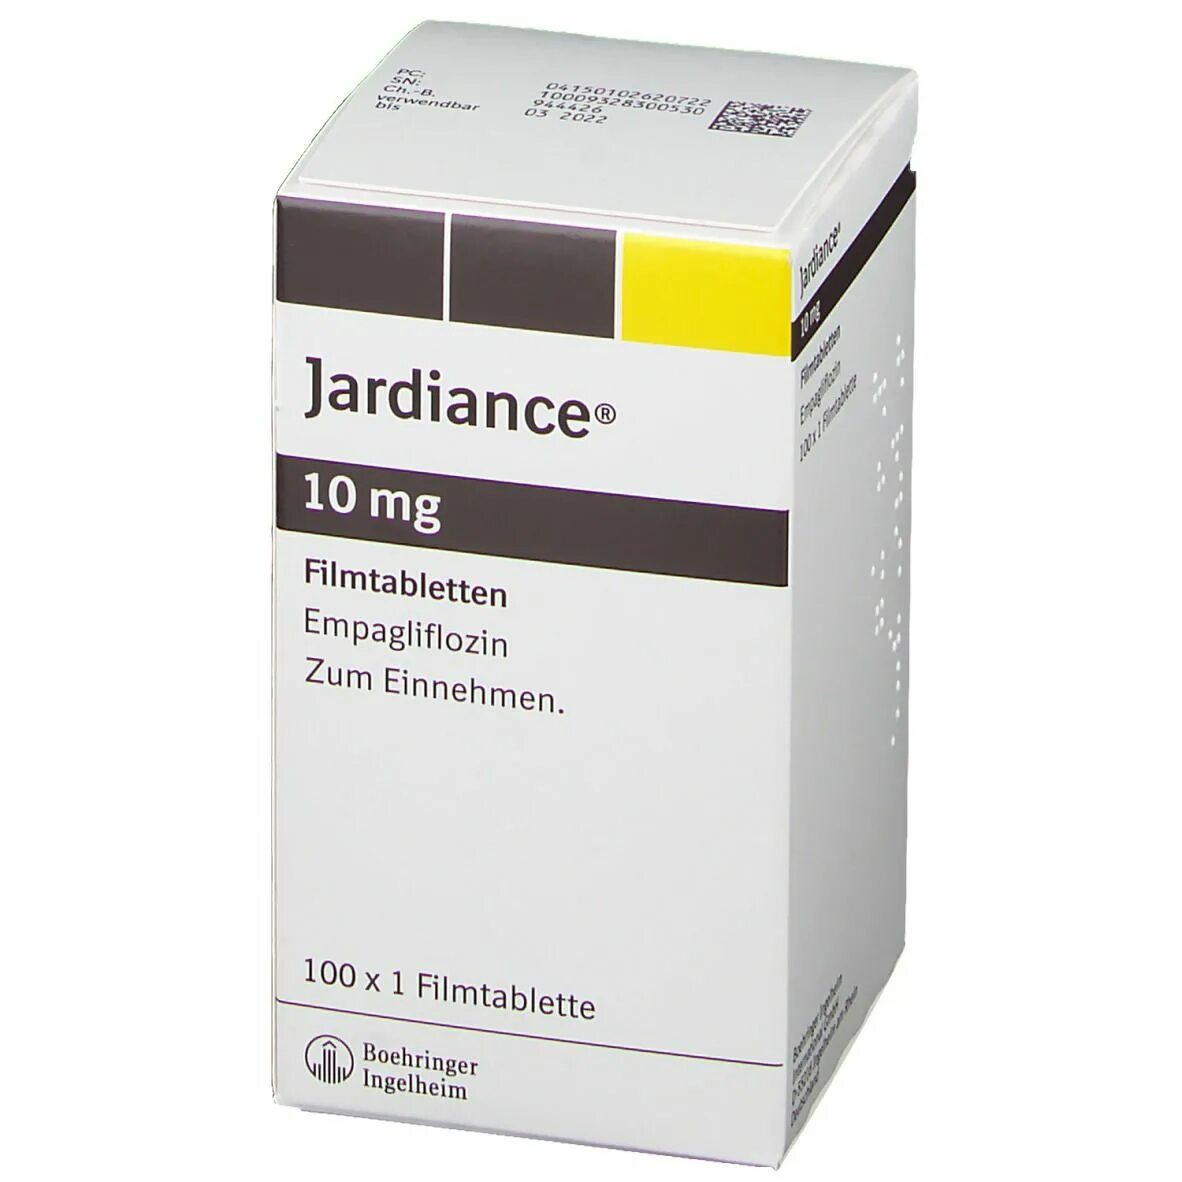 Джардинс отзывы врачей. Эмпаглифлозин Джардинс 25 мг. Джардинс 5 мг. Джардинс 500 мг. Джардинс 10 мг.